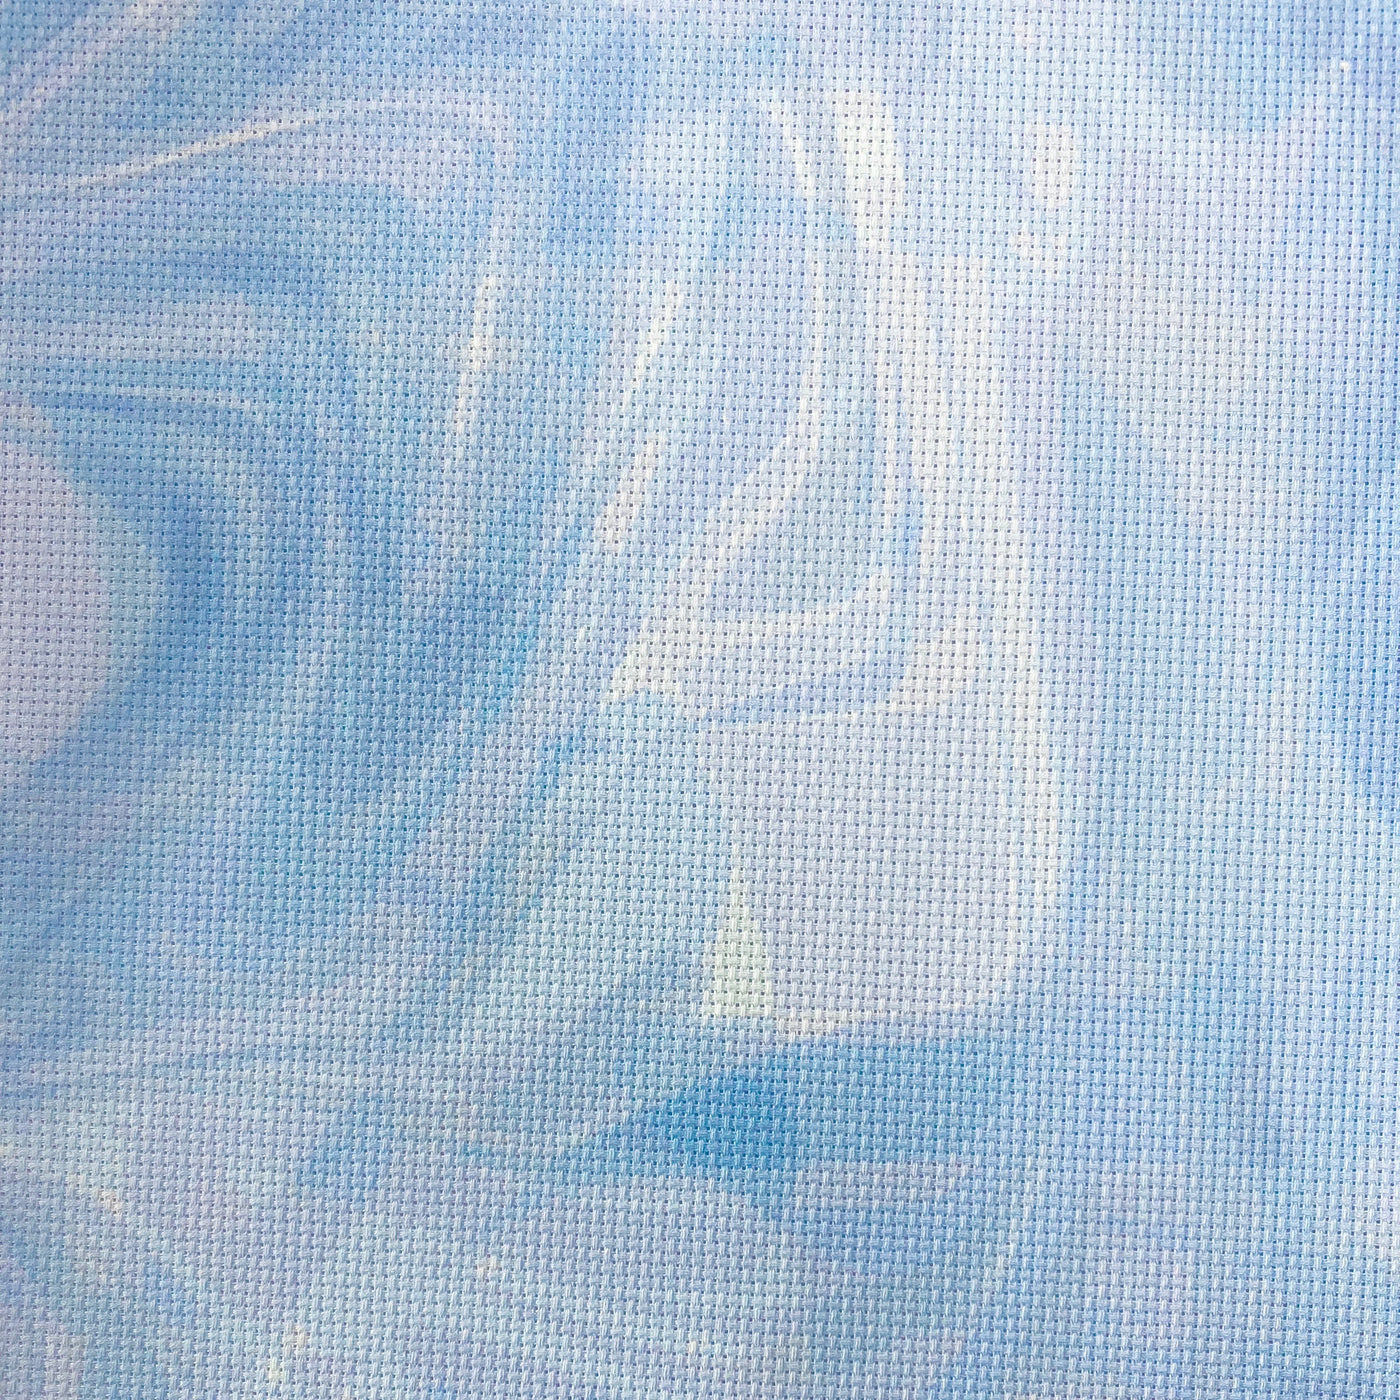 Blue Swirl Printed Cotton Evenweave 28ct